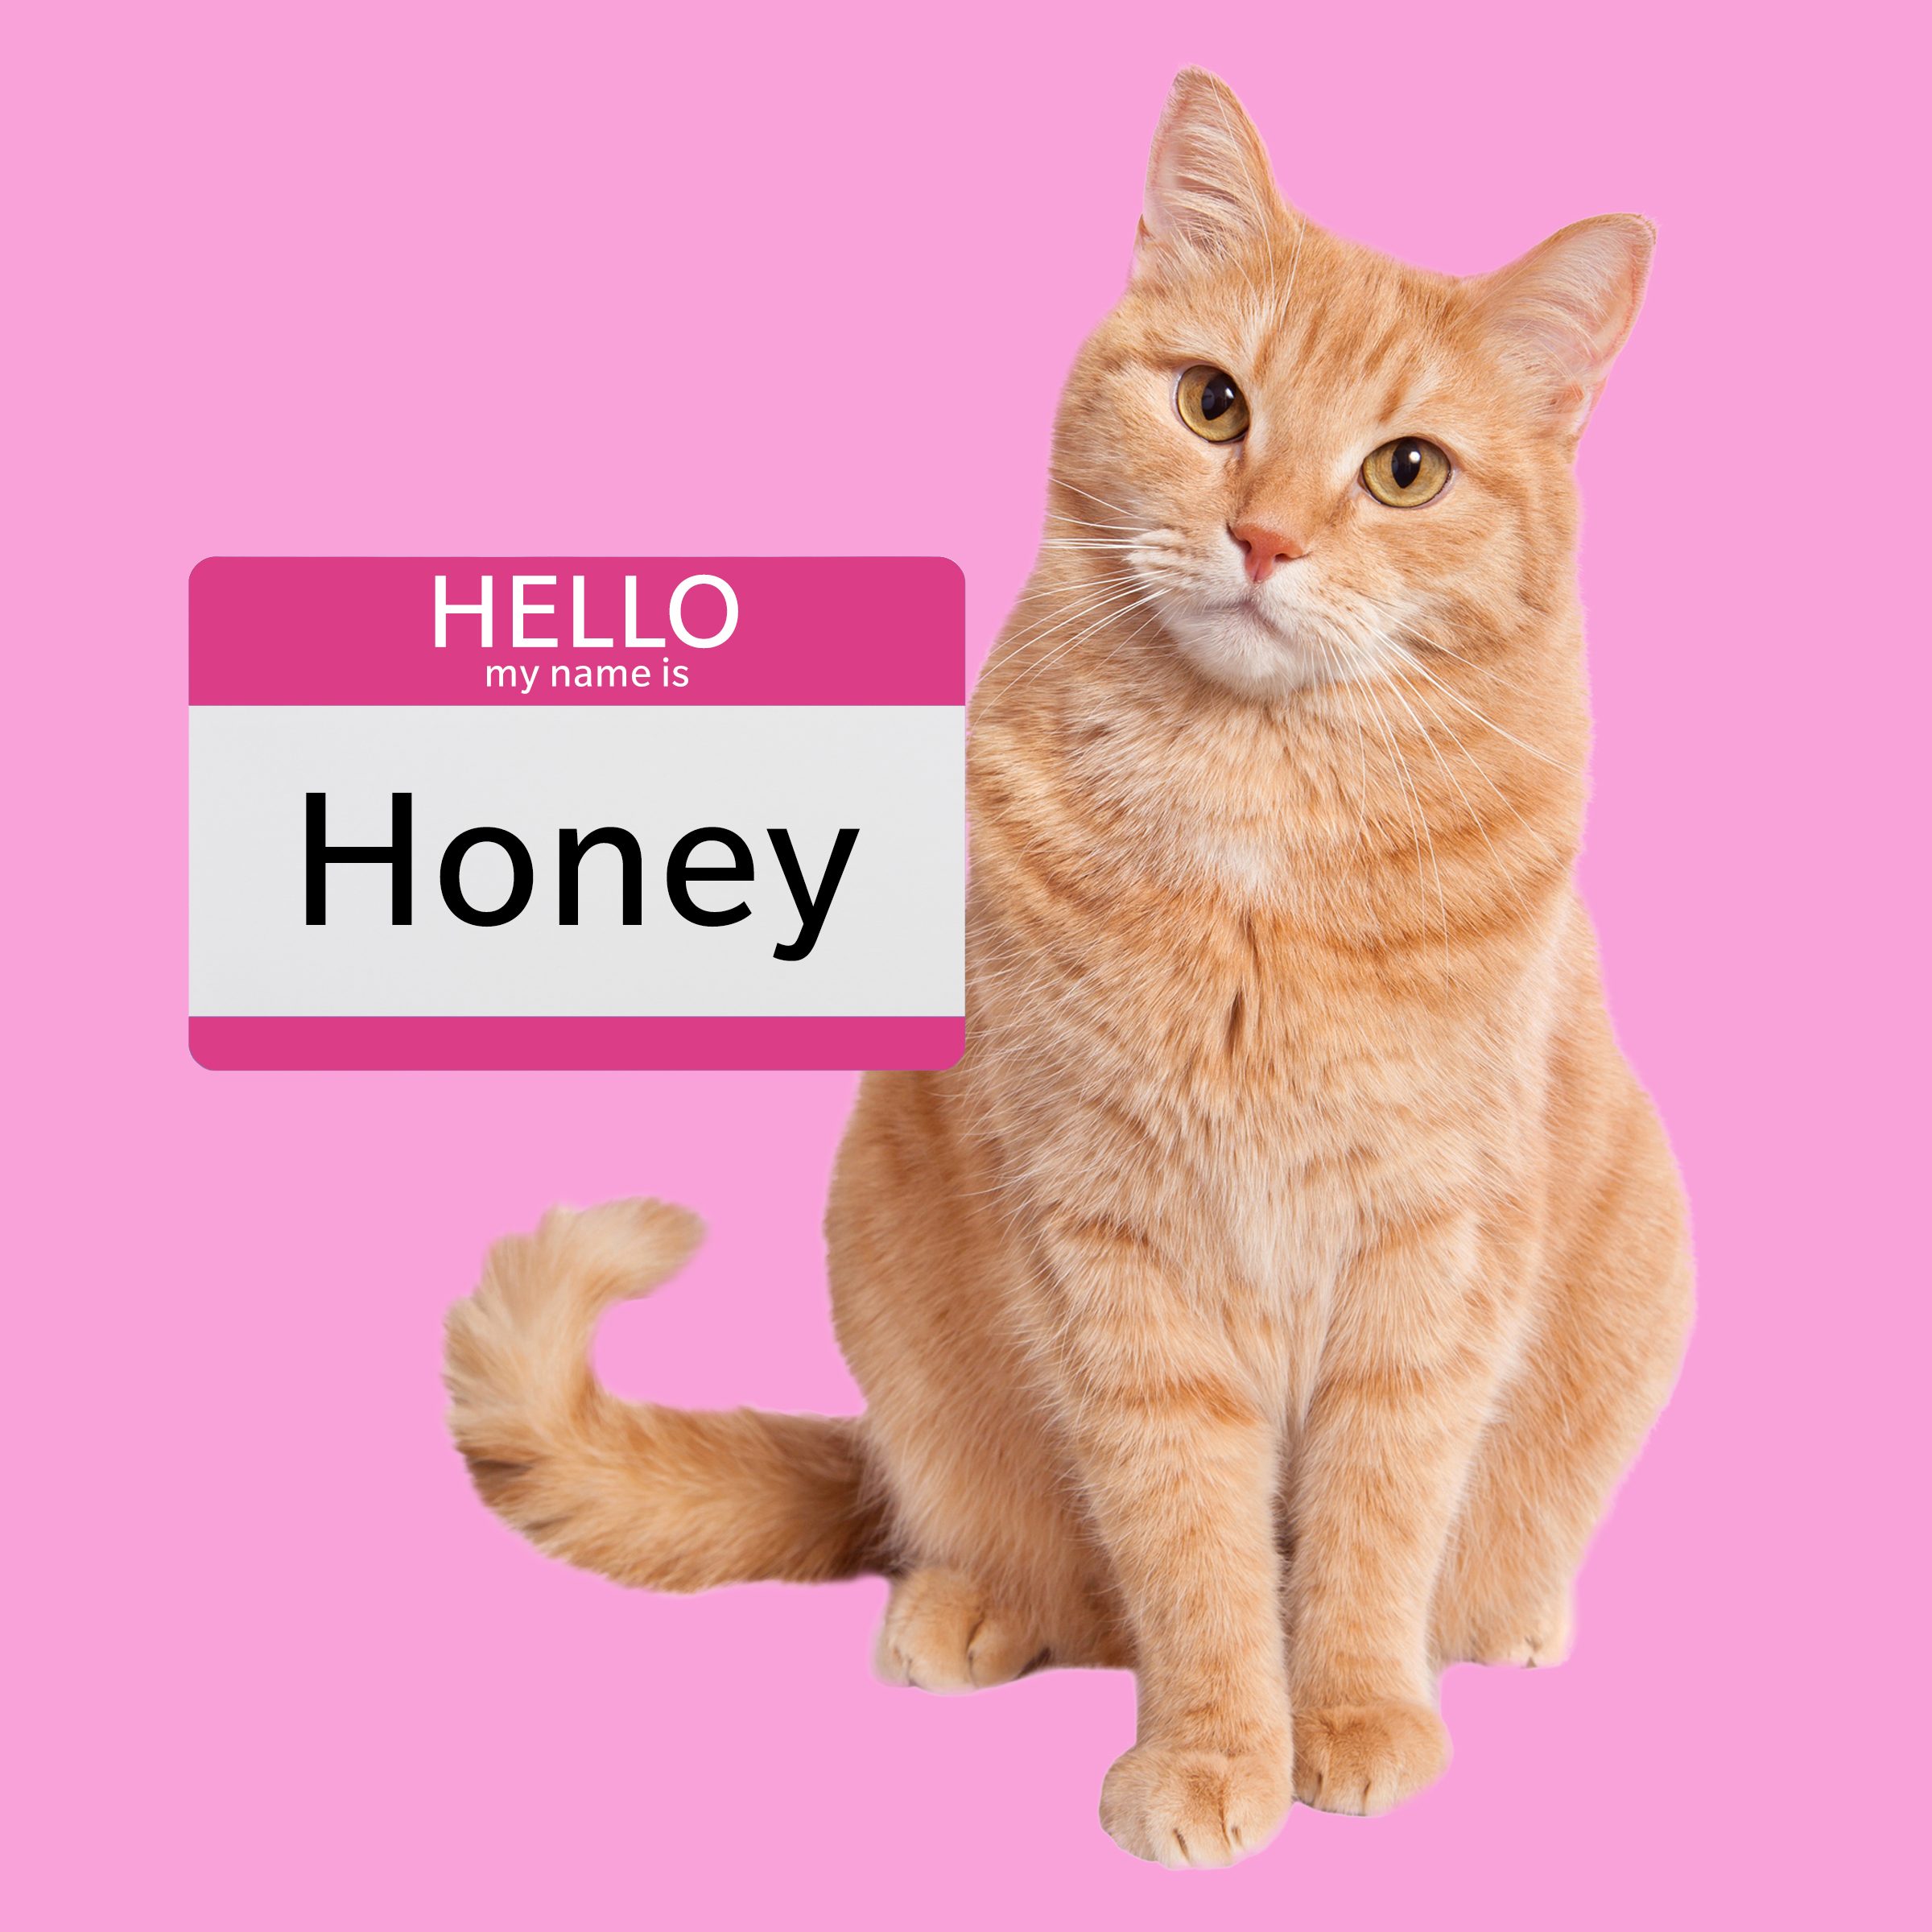 Honey, a girl cat name for an orange cat